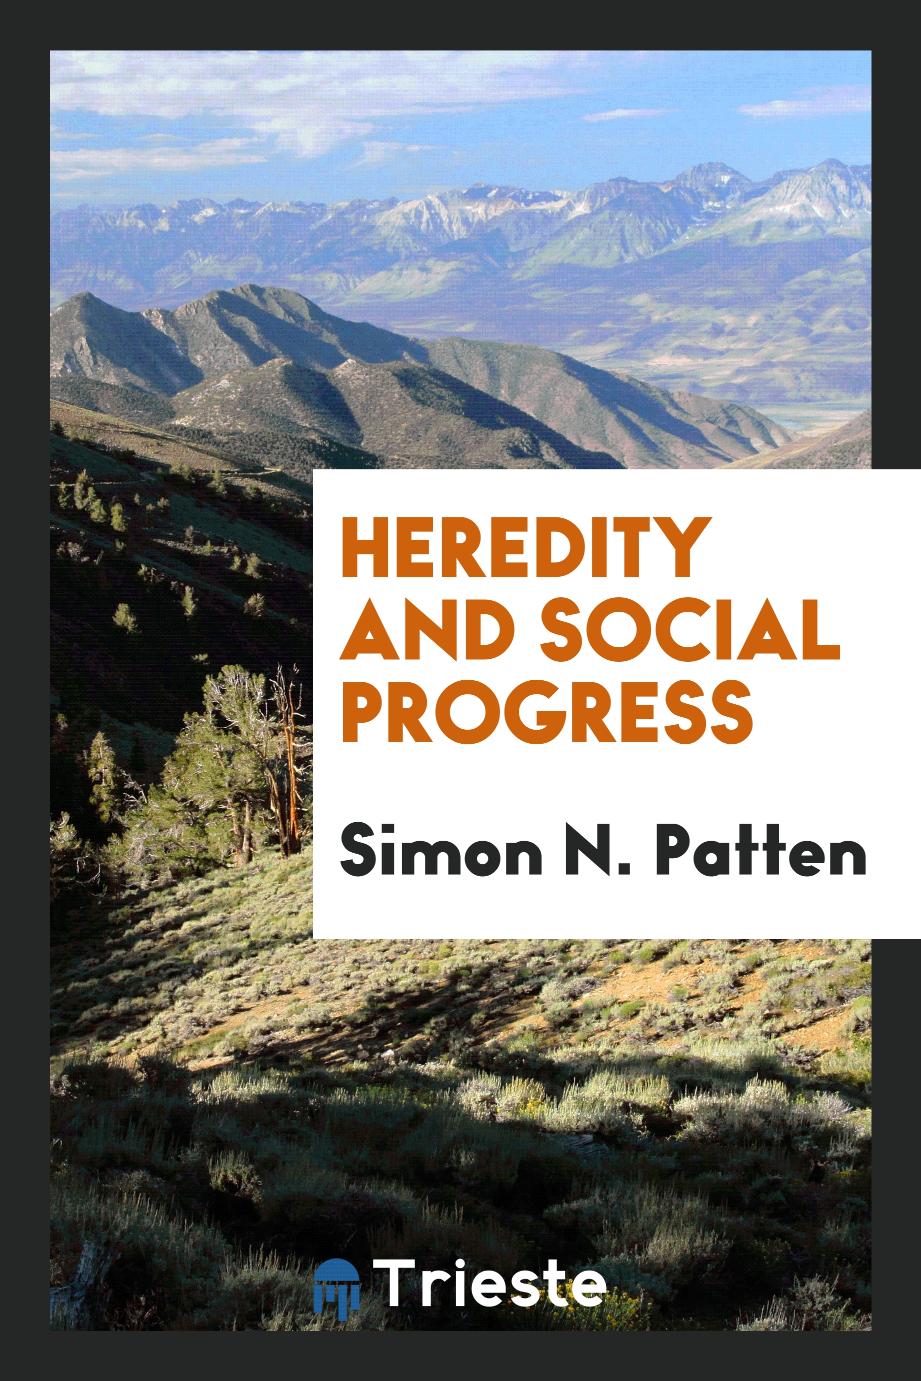 Heredity and social progress